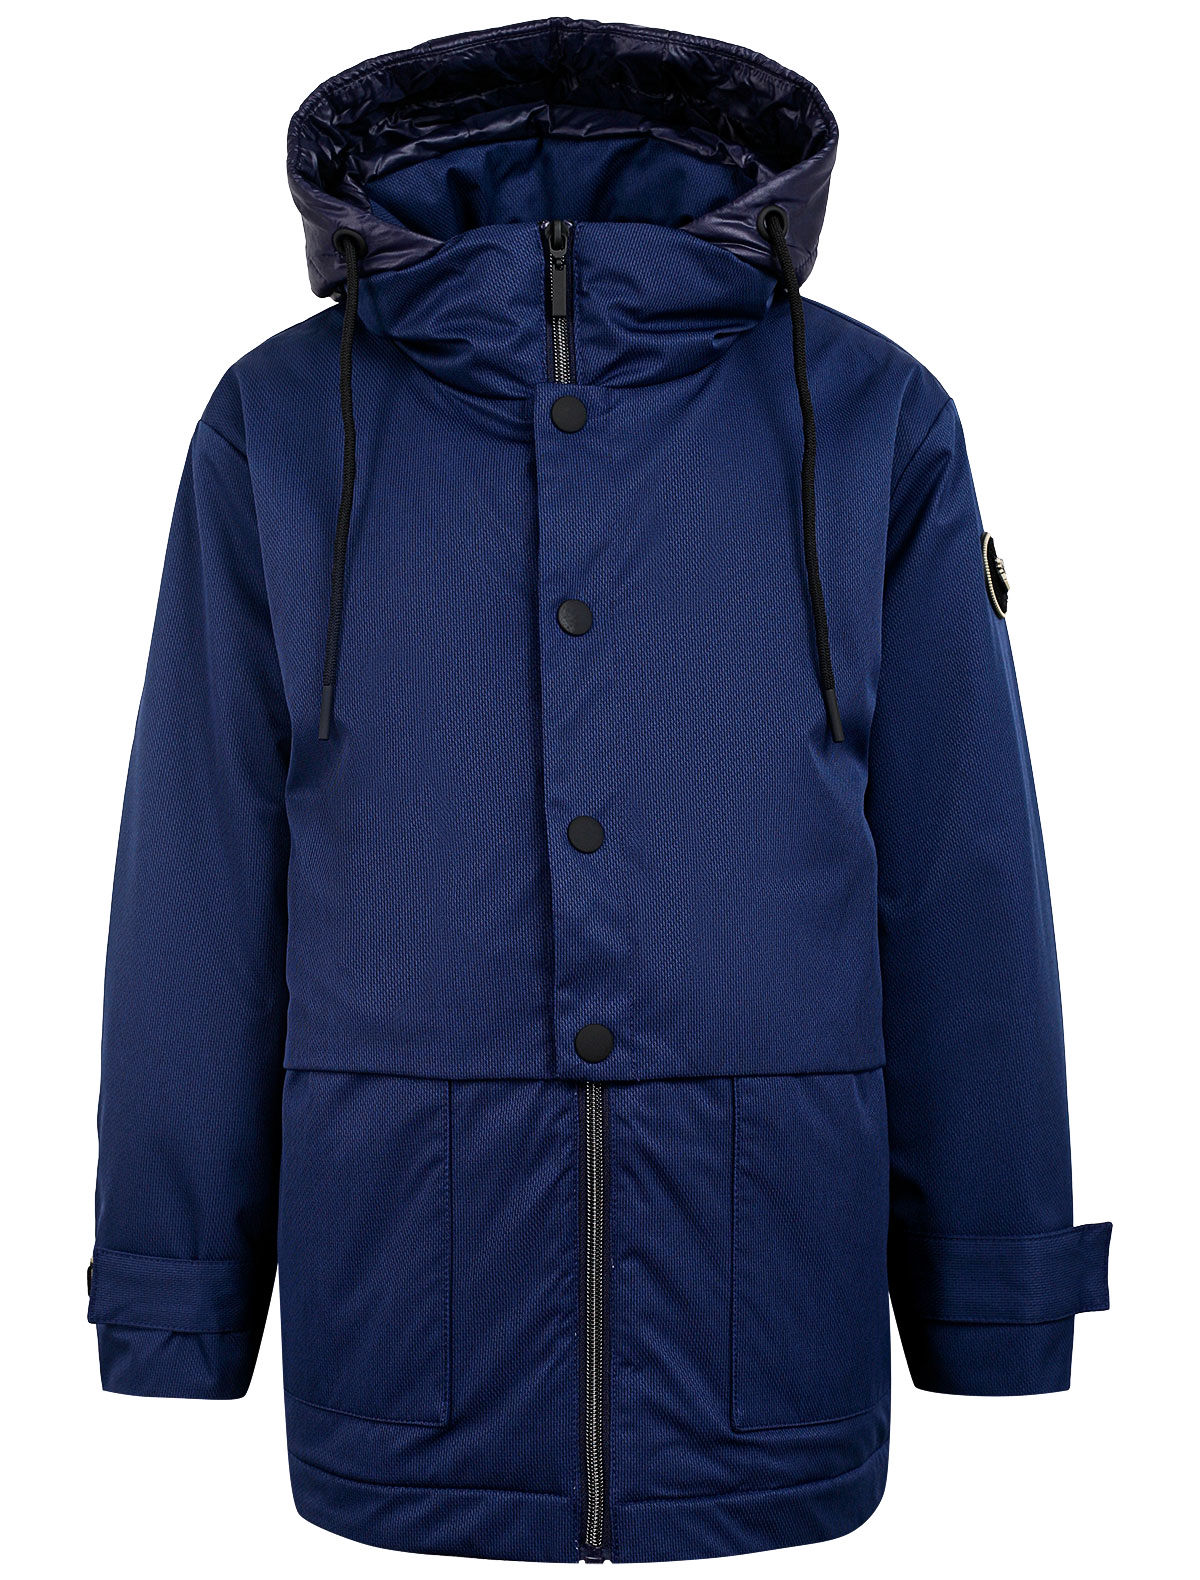 Куртка SILVER SPOON 2327564, цвет синий, размер 11 1074519180170 - фото 1